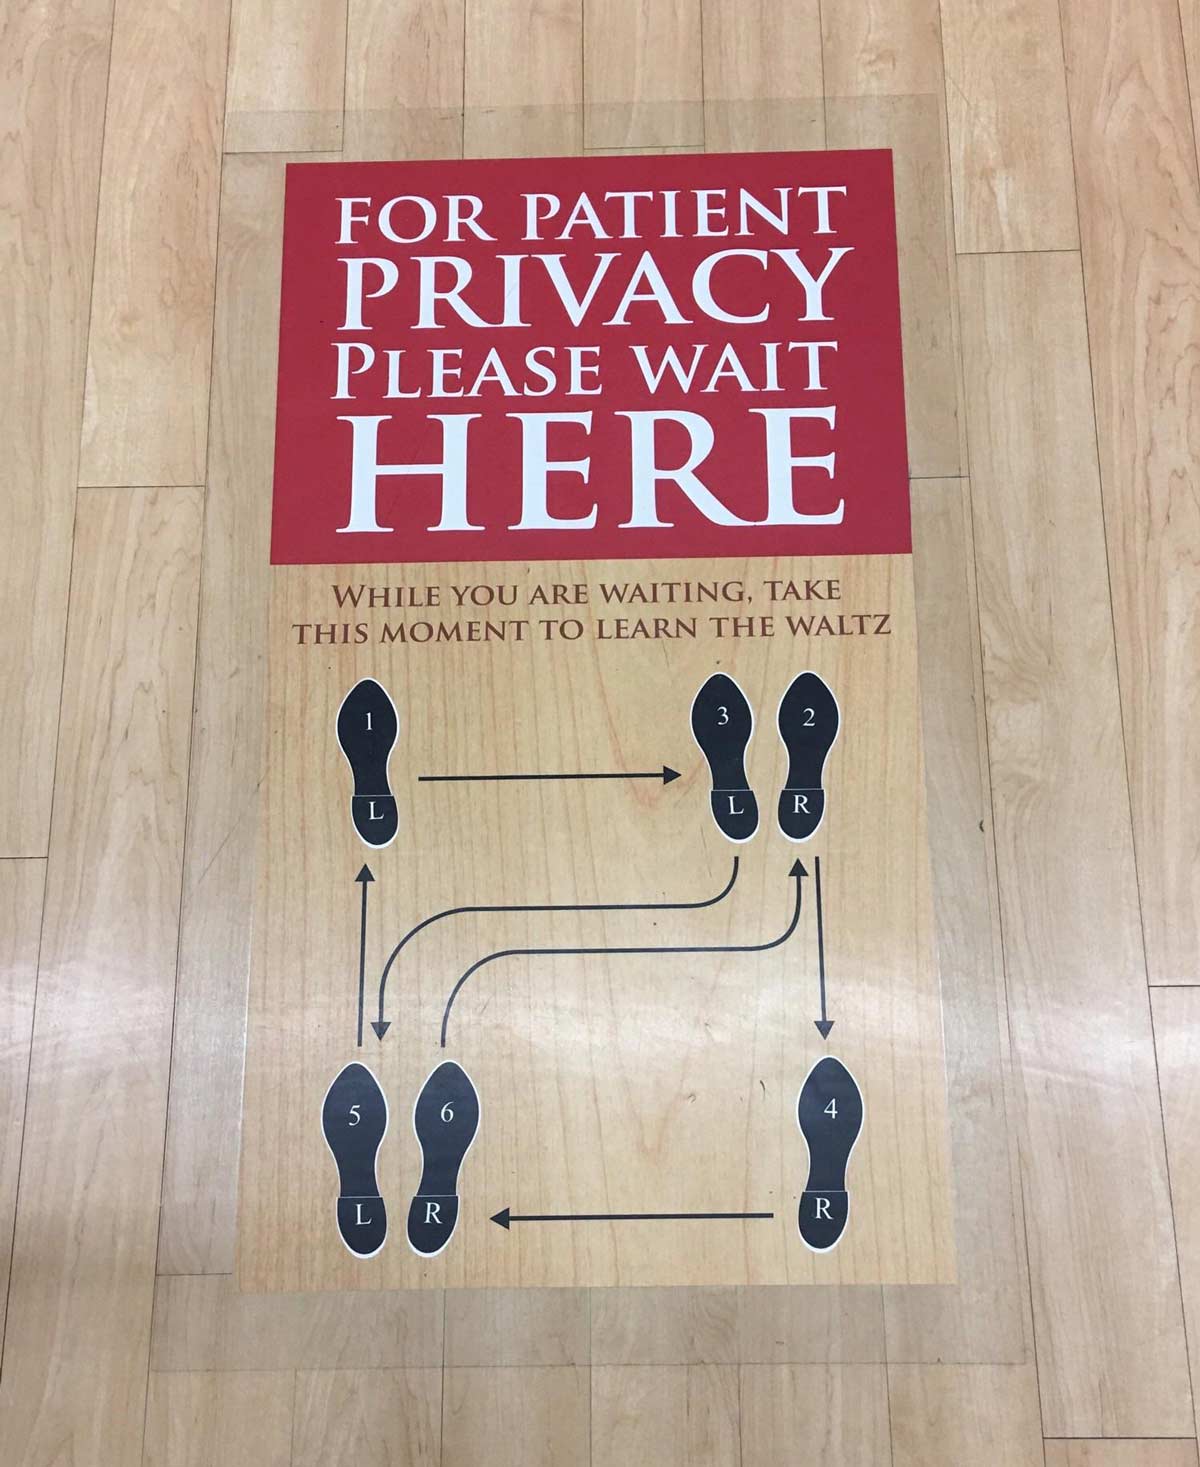 Please wait here...